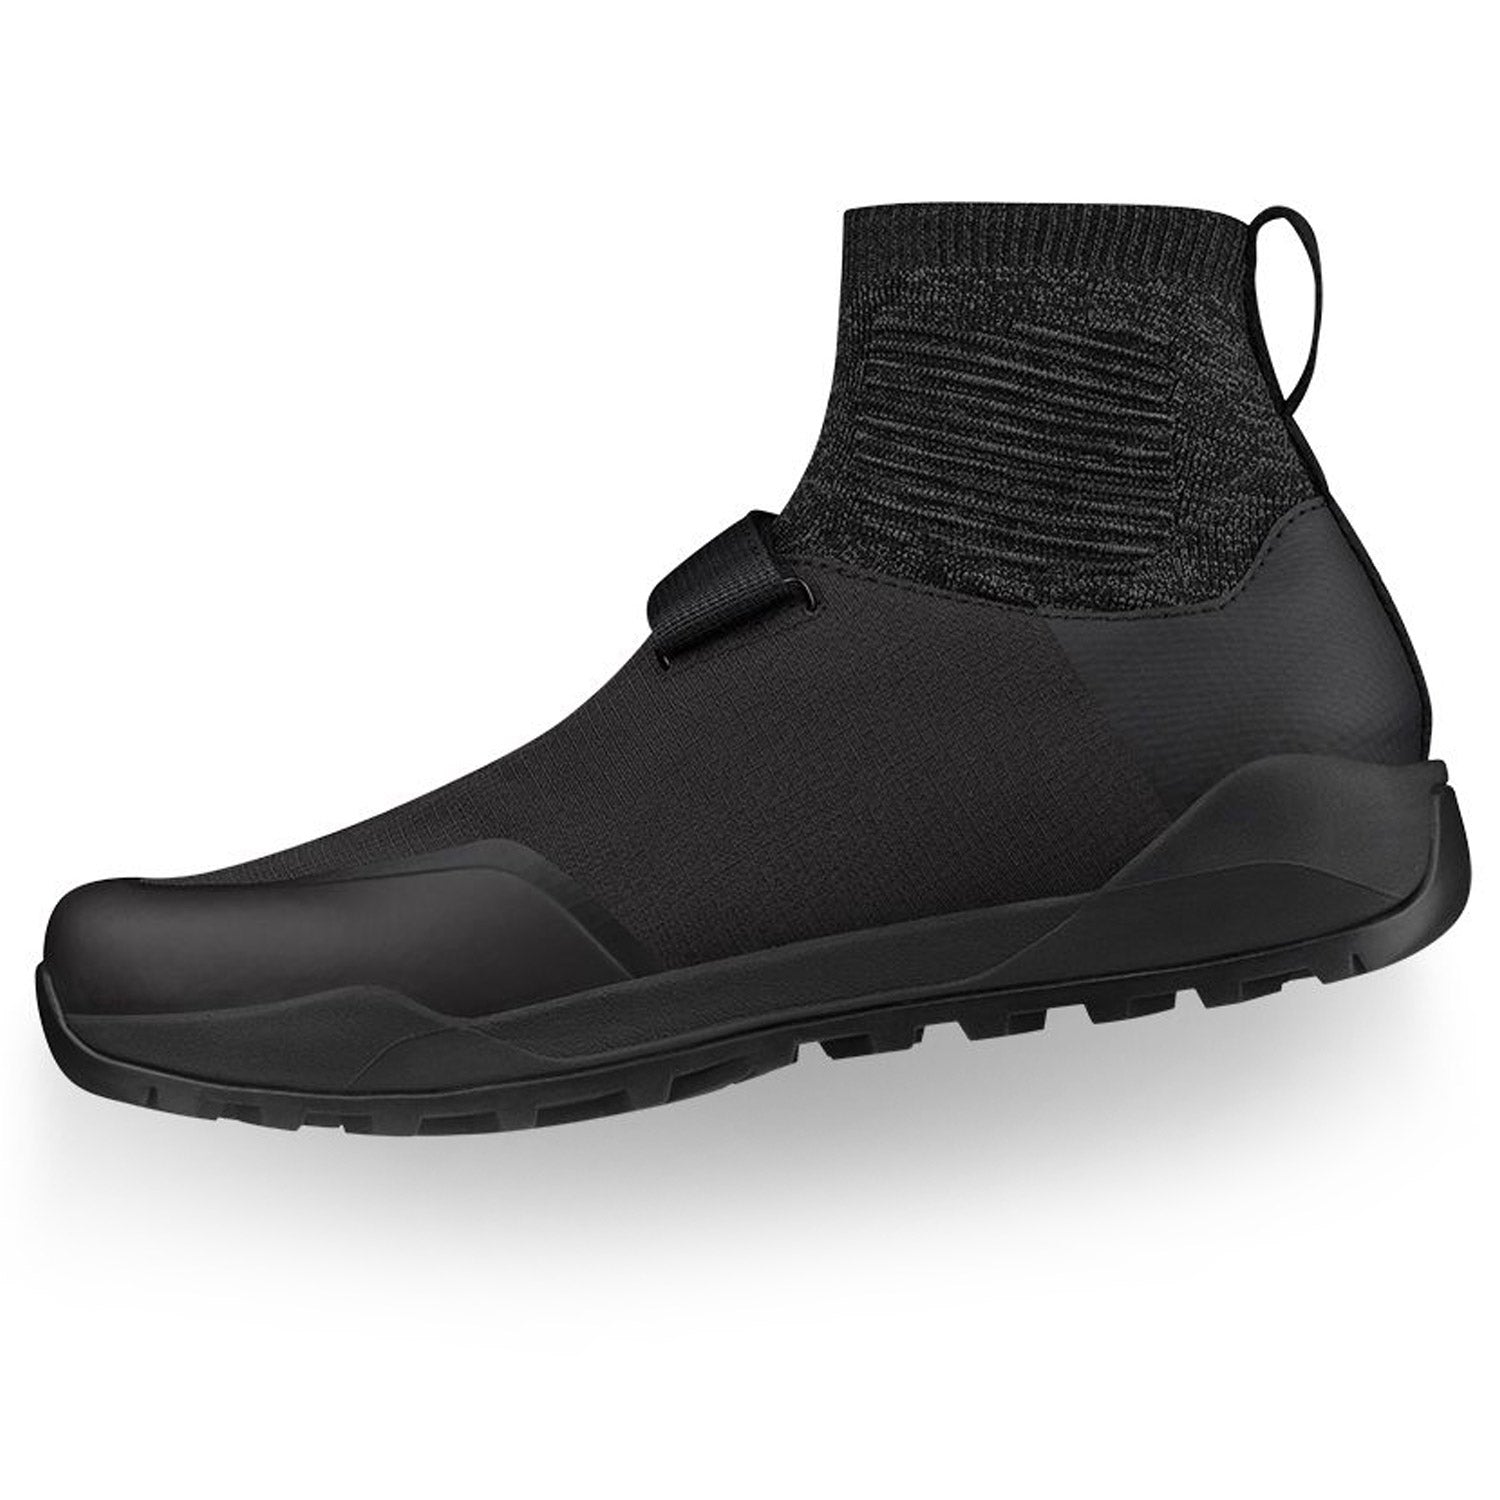 Fizik Terra Clima X2 shoes - Black | All4cycling